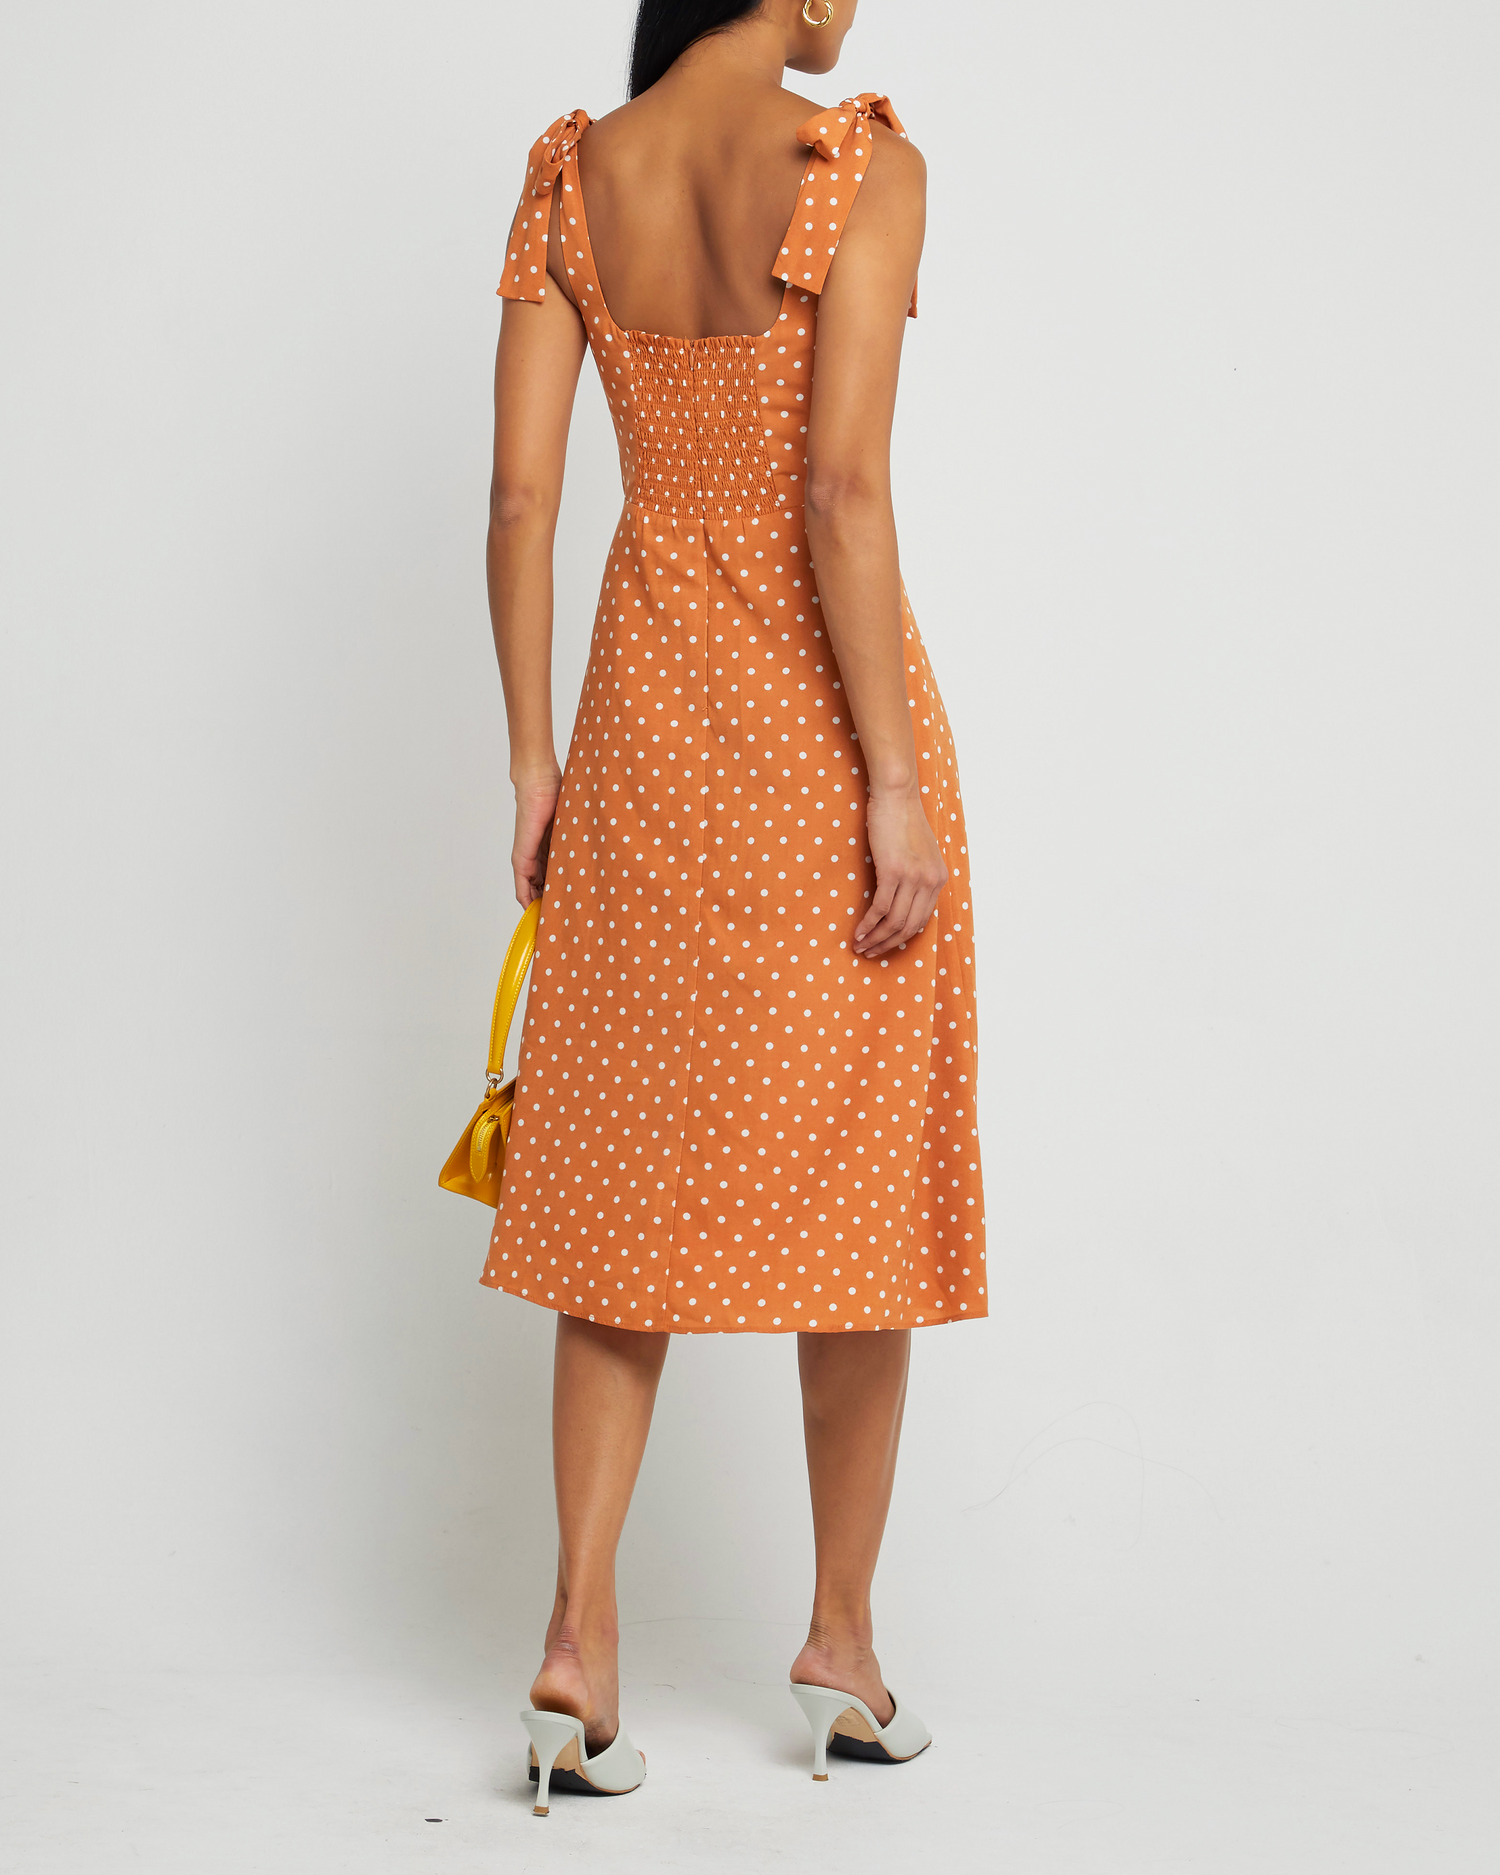 Second image of Sasha Dress, a orange midi dress, side slit, tie straps, bow, ribbon, polka dot